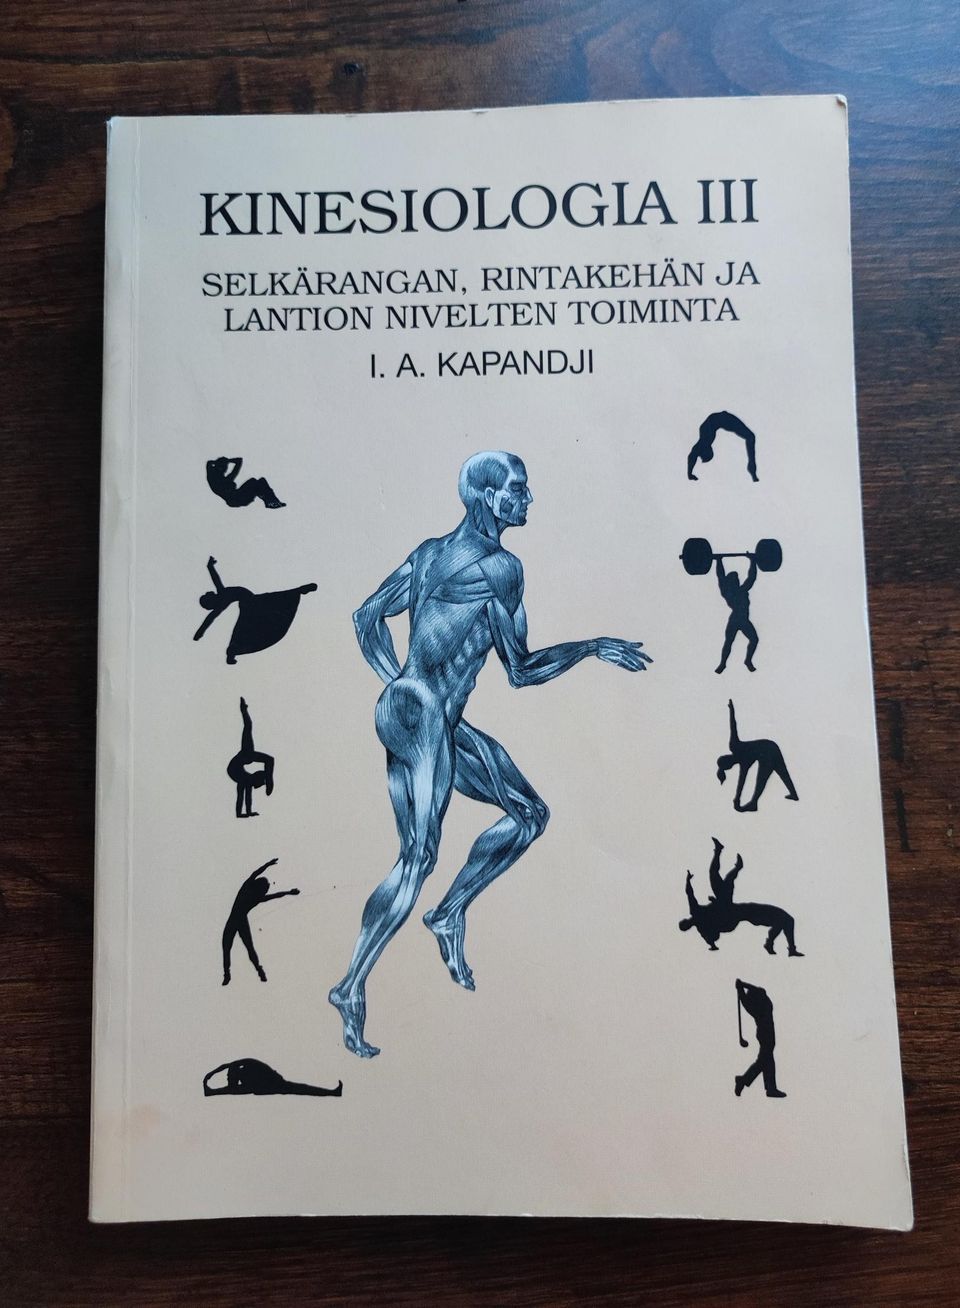 Kinesiologia III, I.A. Kapandji